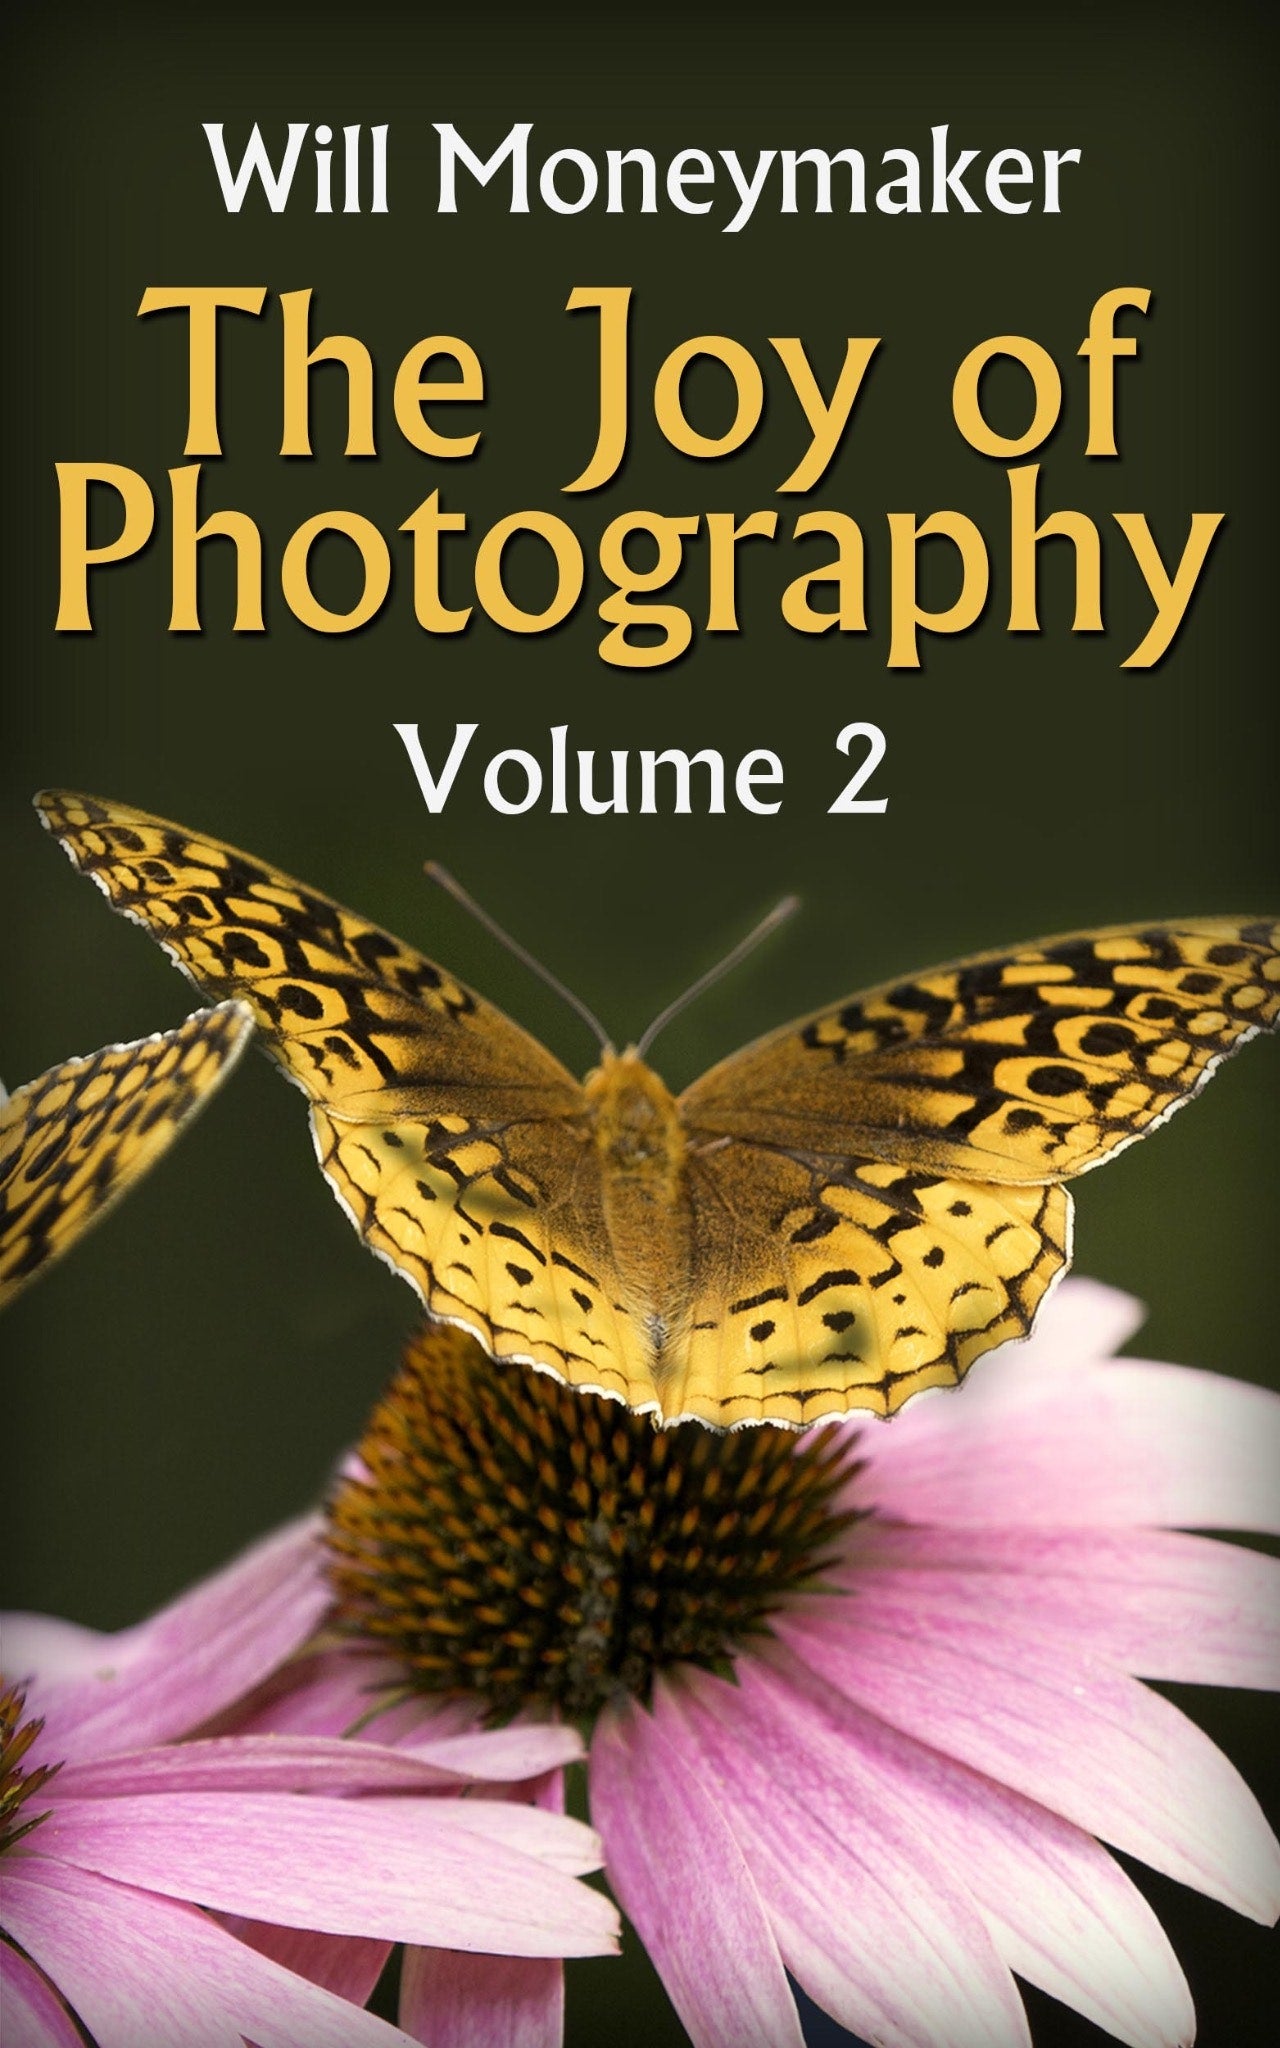 The Joy of Photography Vol. 2